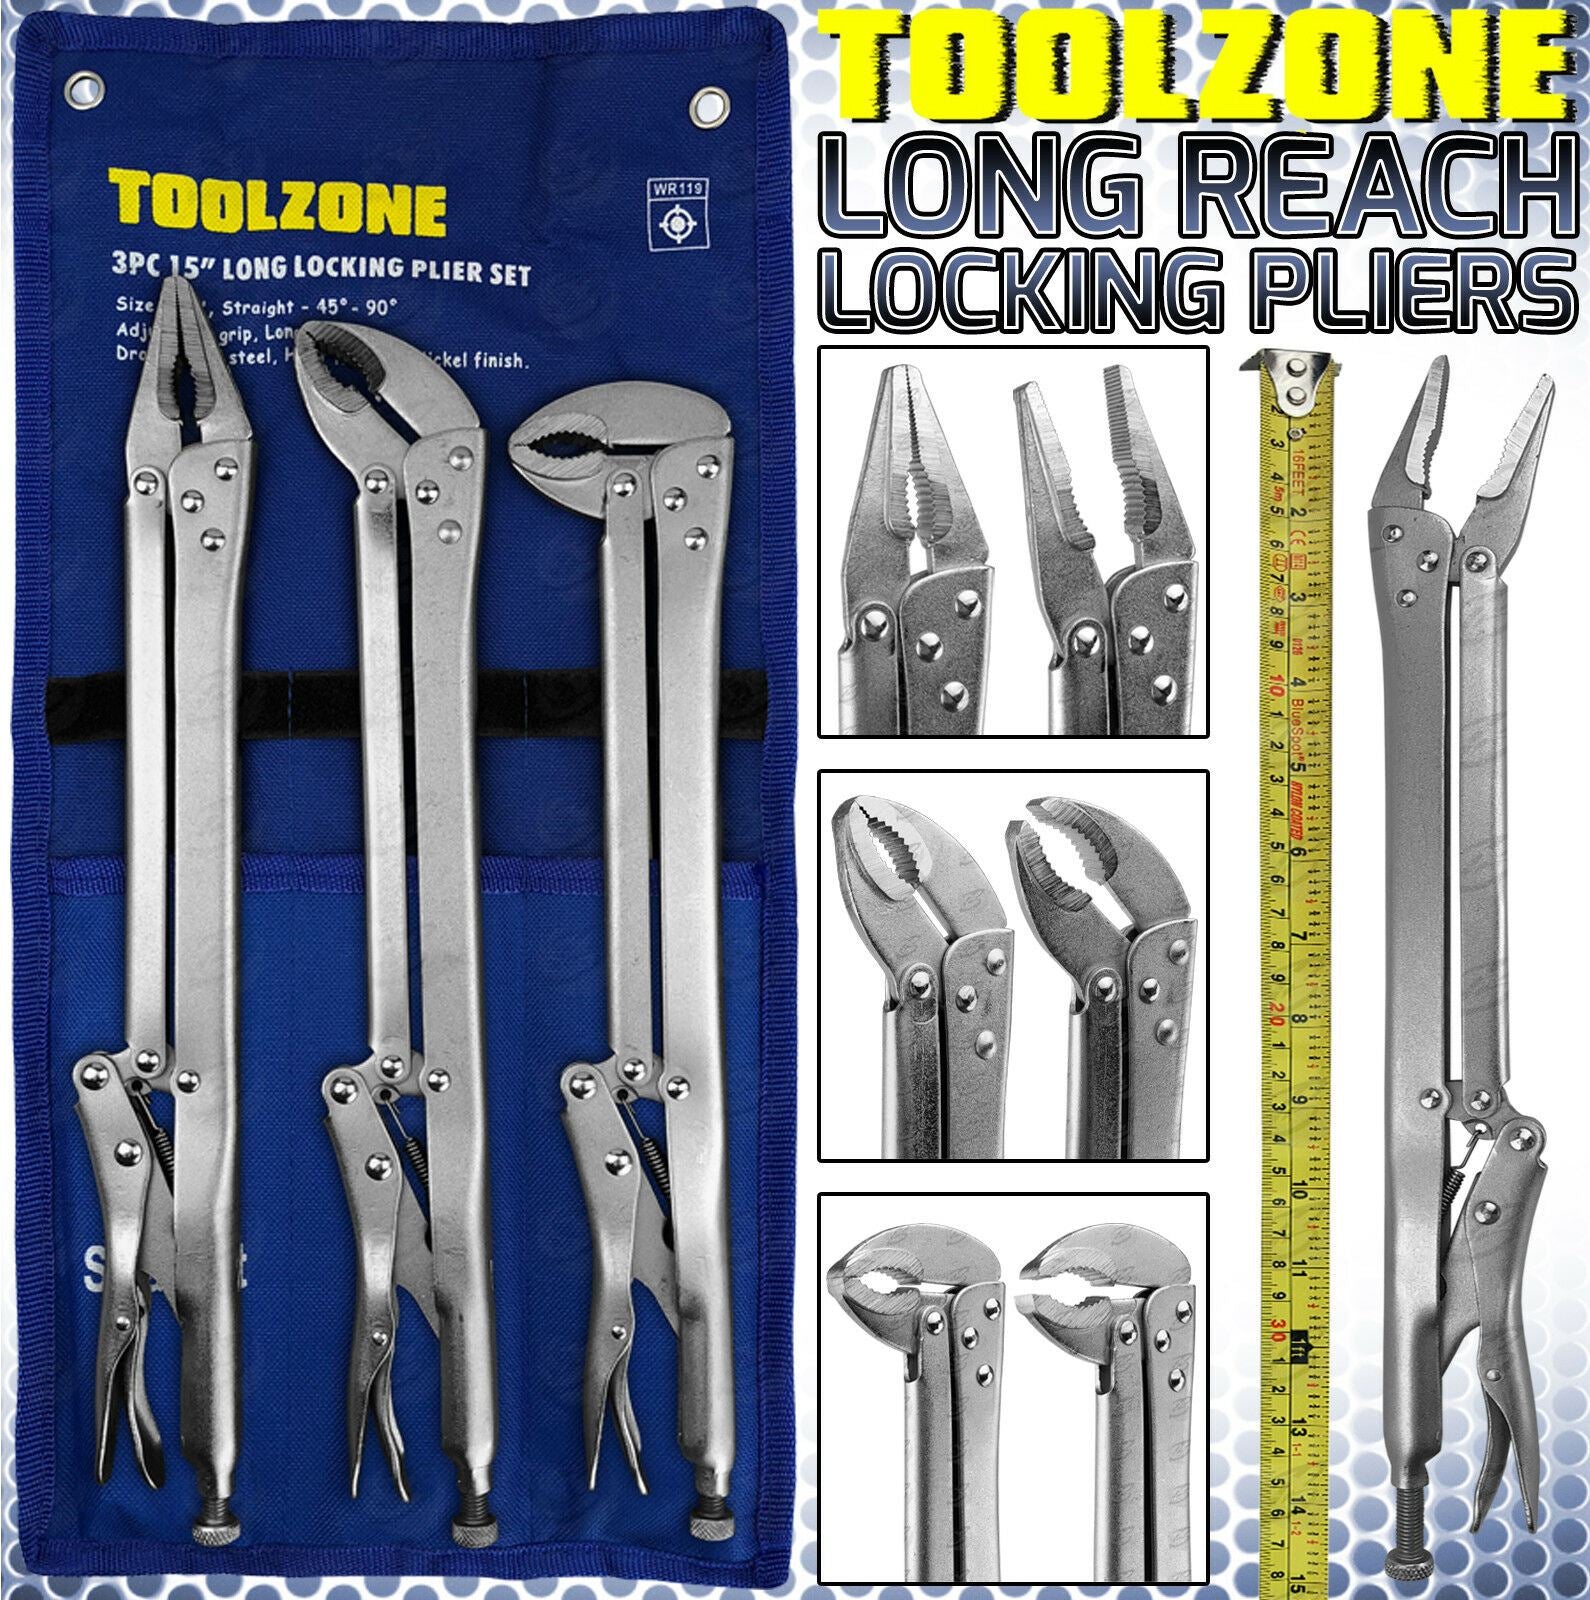 TOOLZONE 3PCS 15" EXTRA LONG LOCKING PLIERS